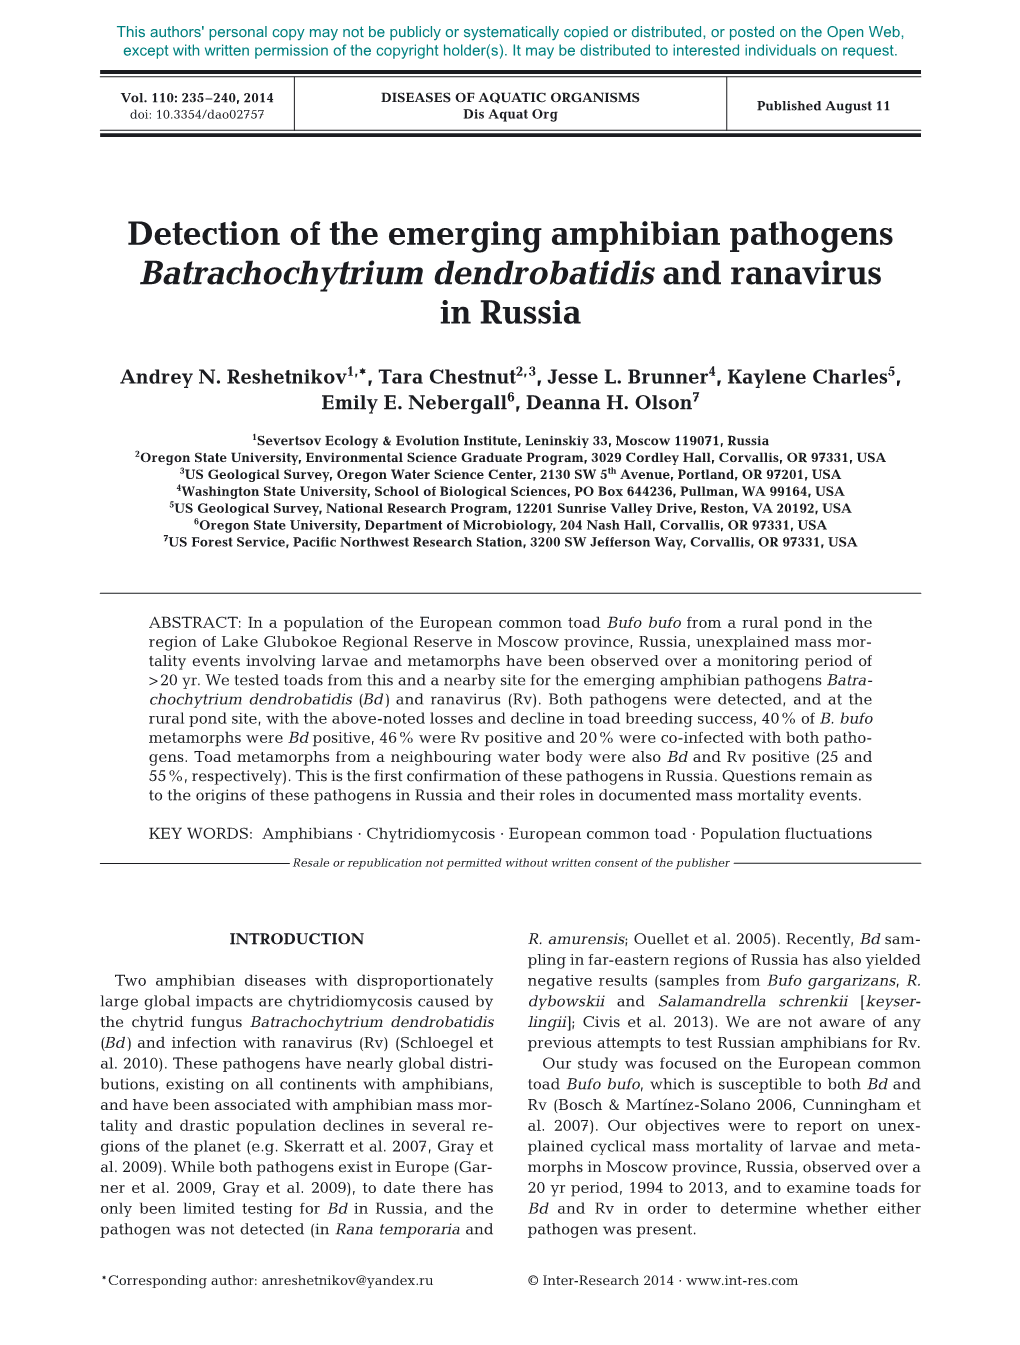 Detection of the Emerging Amphibian Pathogens Batrachochytrium Dendrobatidis and Ranavirus in Russia